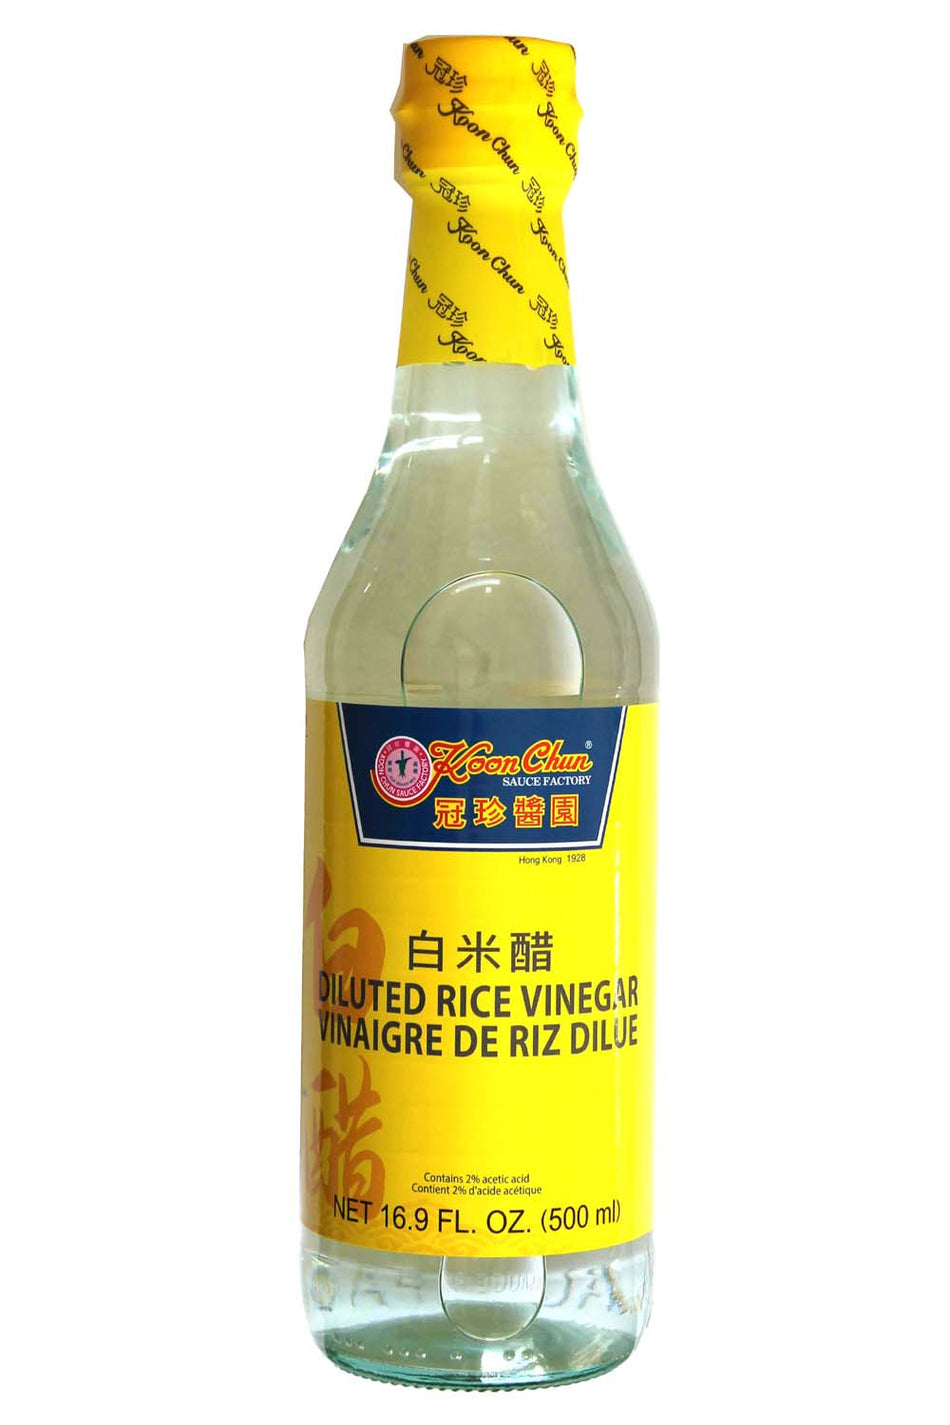 Koon Chun Diluted Rice Vinegar